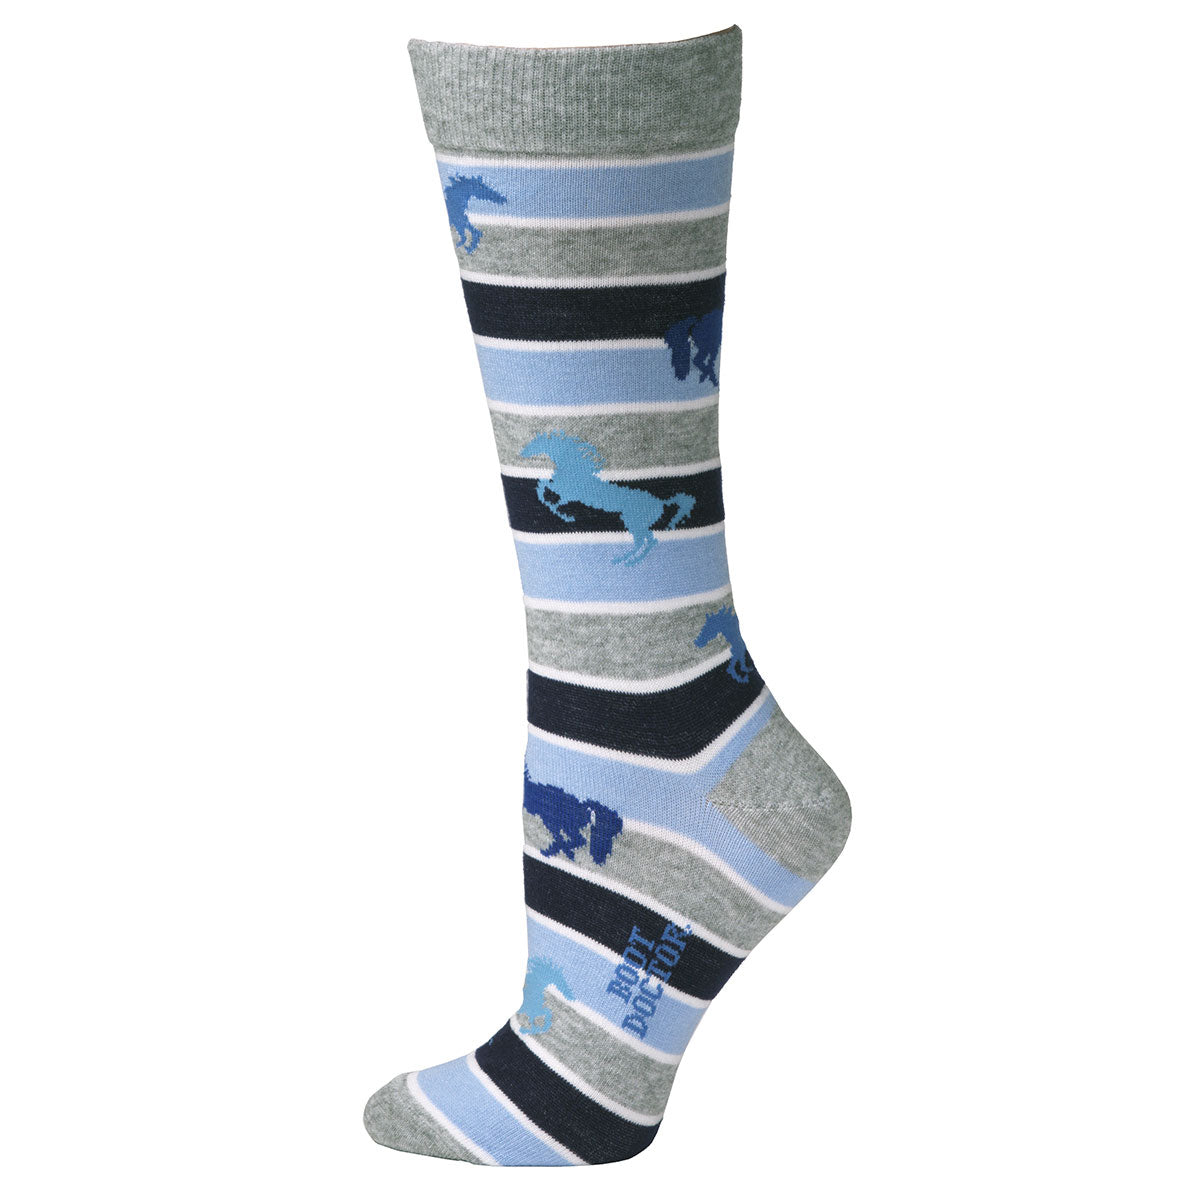 Ladies Boot Doctor Crew - Light Blue Stripes - Socks